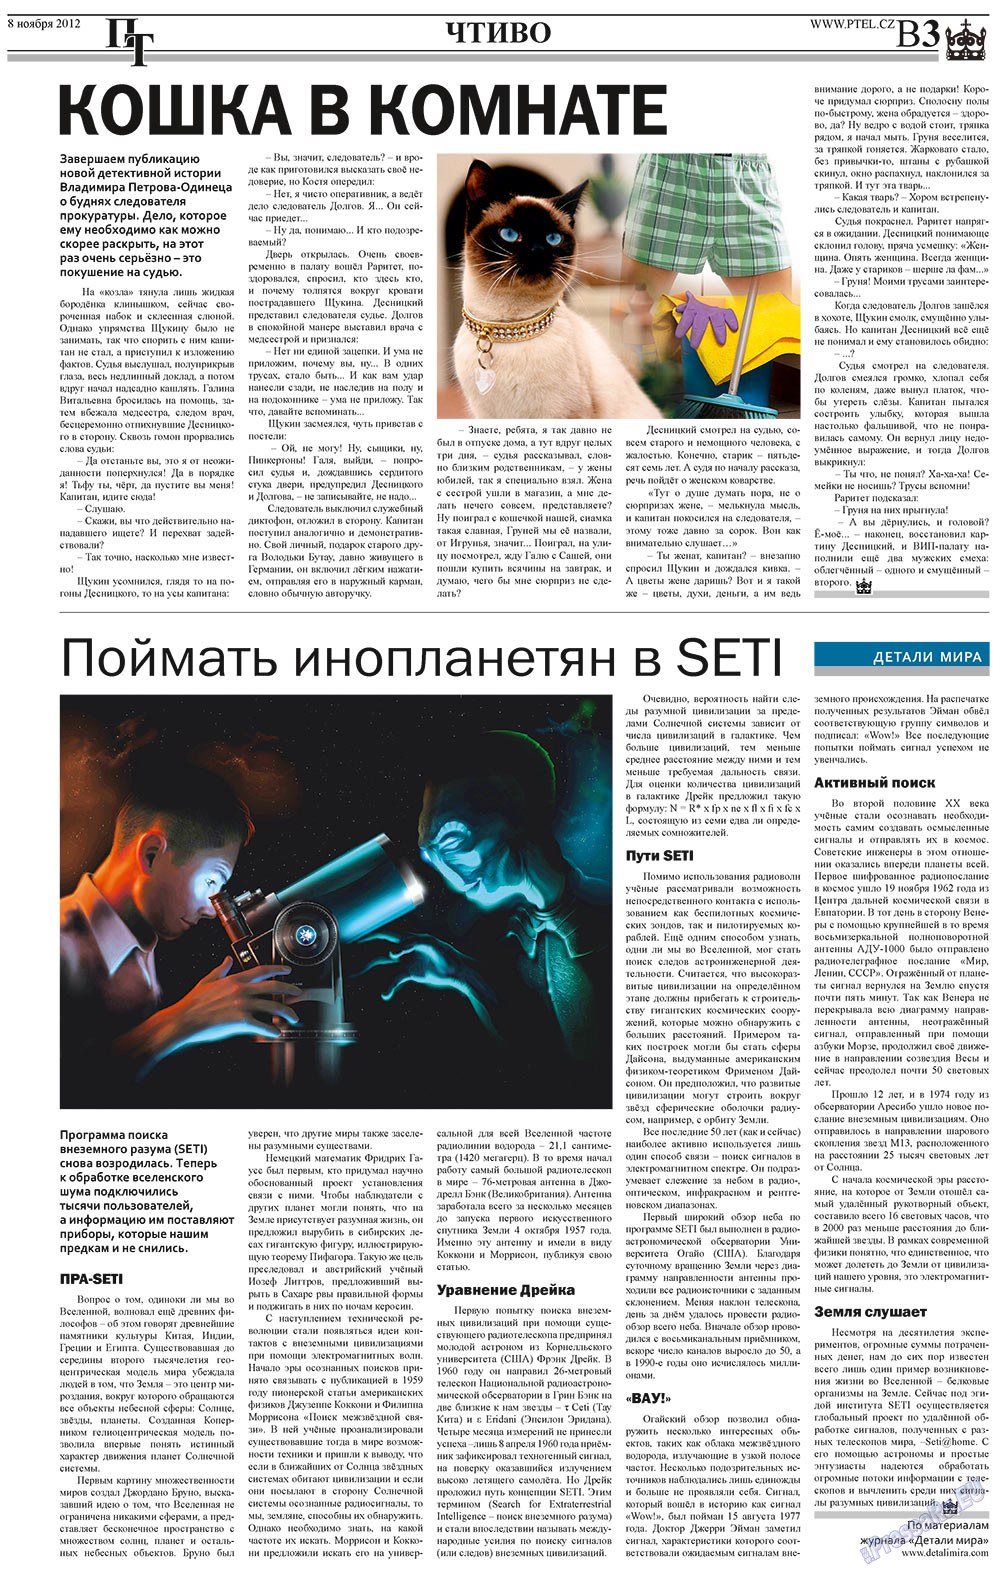 Пражский телеграф, газета. 2012 №44 стр.11